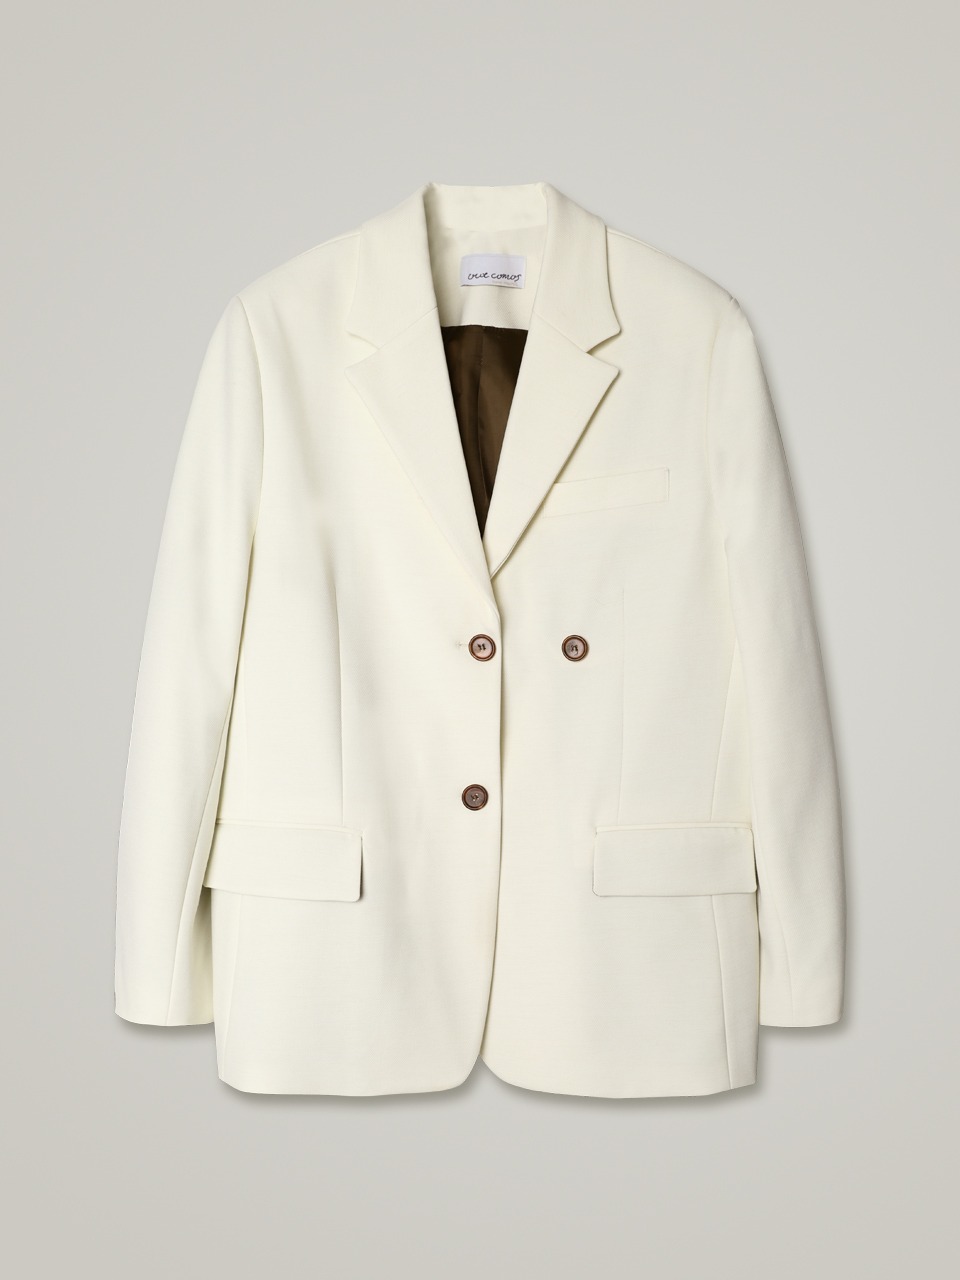 comos 954 double twill jacket (cream)